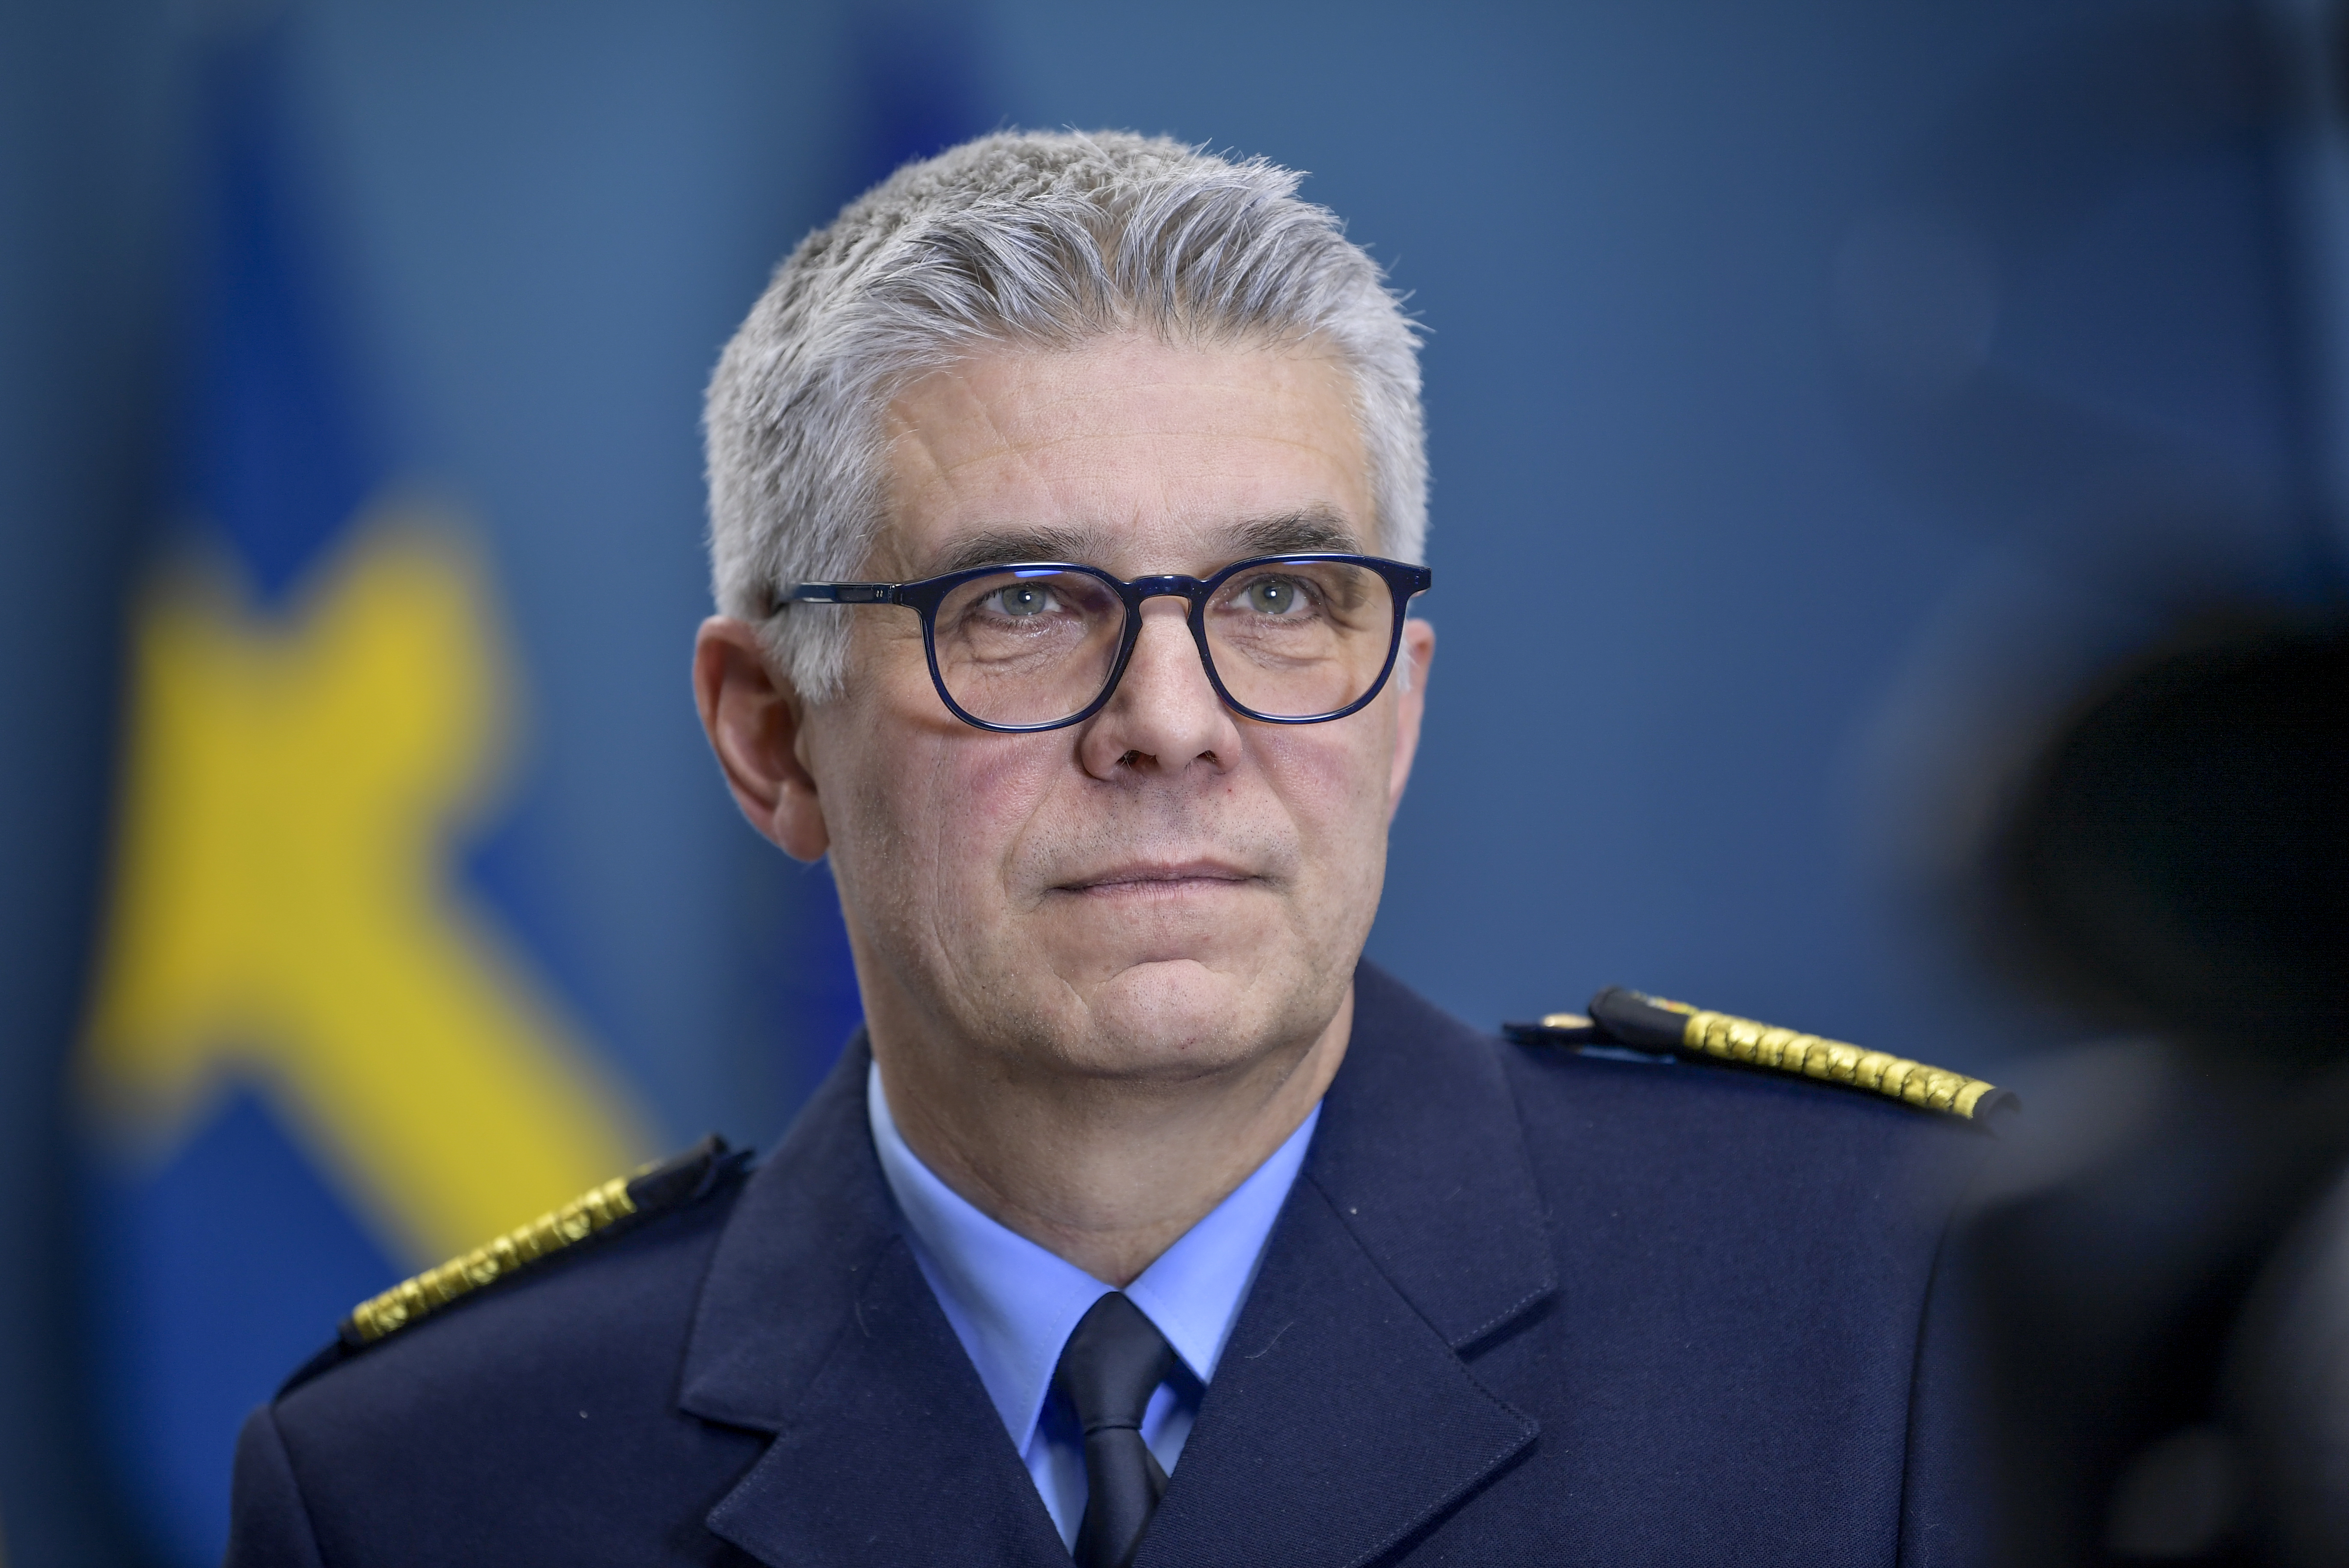 Polischefen Anders Thornberg pausar arbete för cancerbehandling